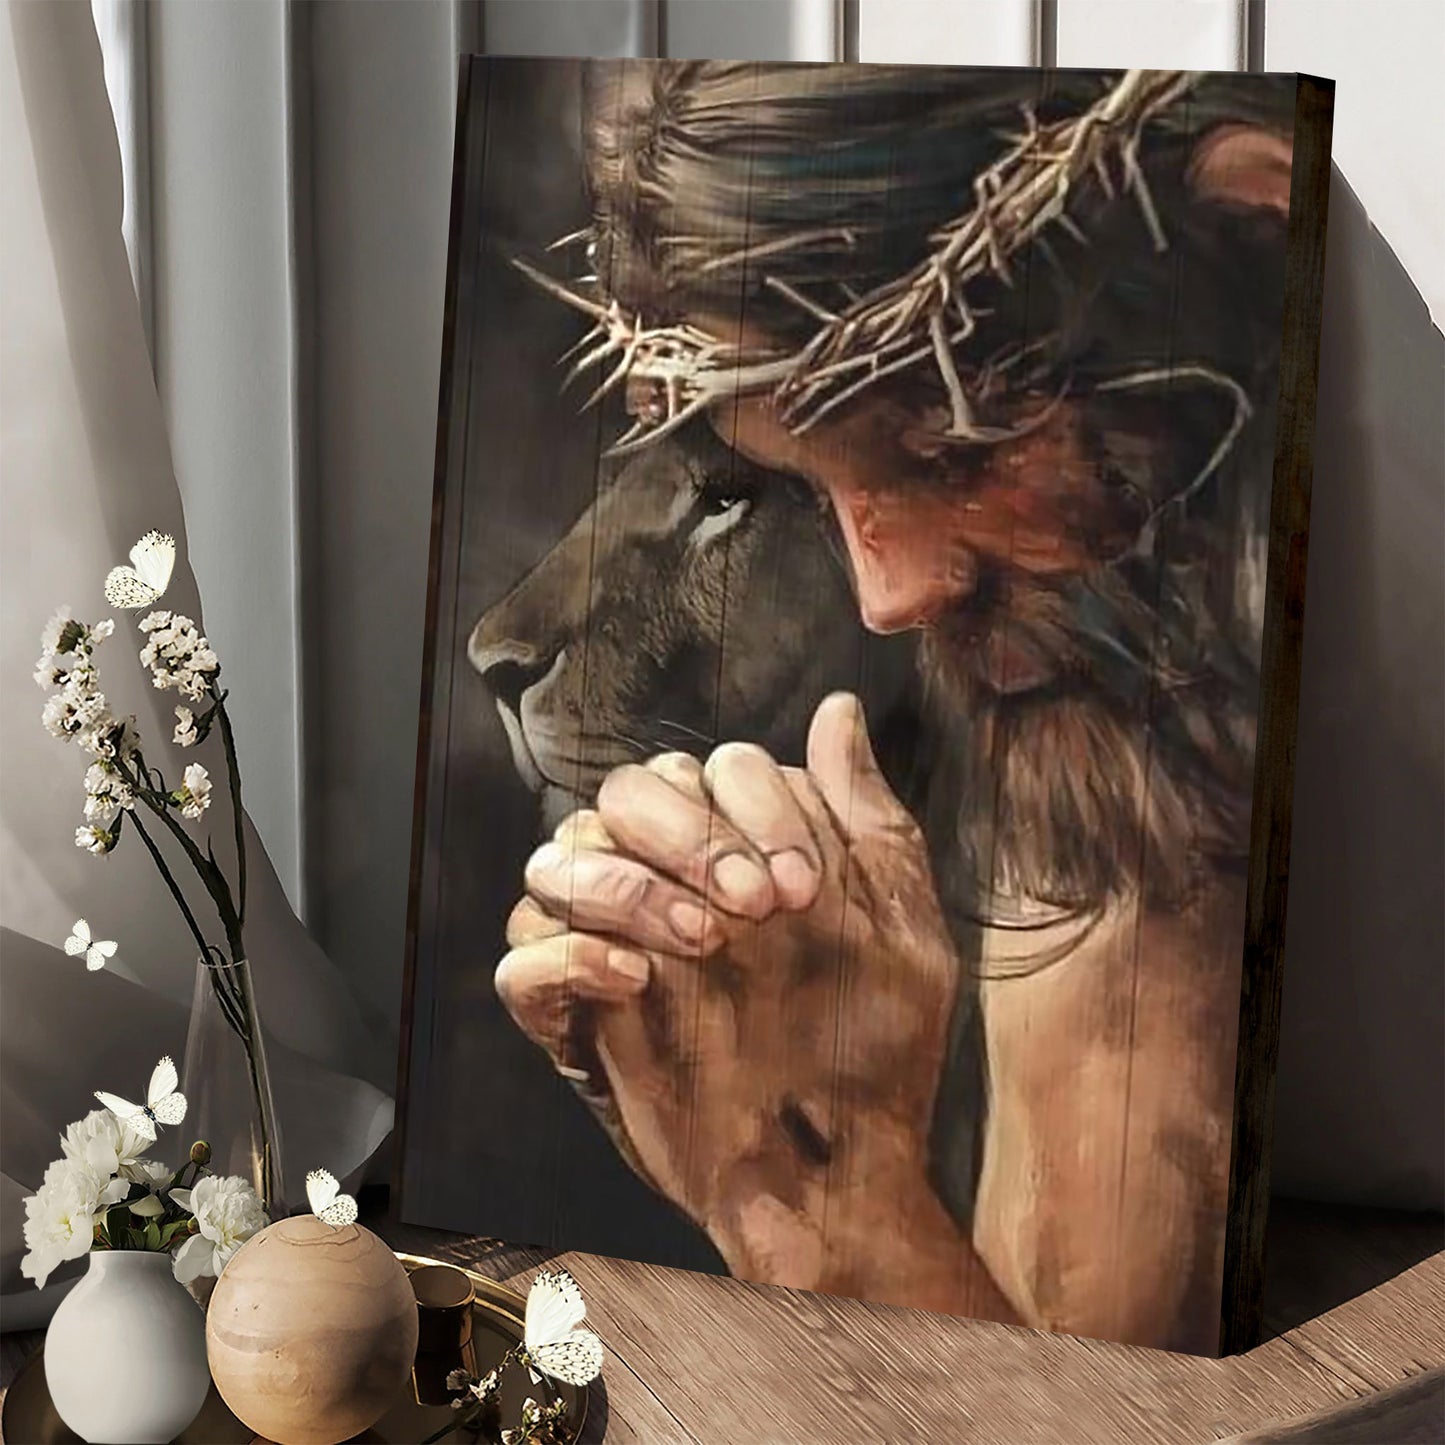 The Lion Jesus Prayer Canvas Prints - Jesus Christ Art - Christian Canvas Wall Decor